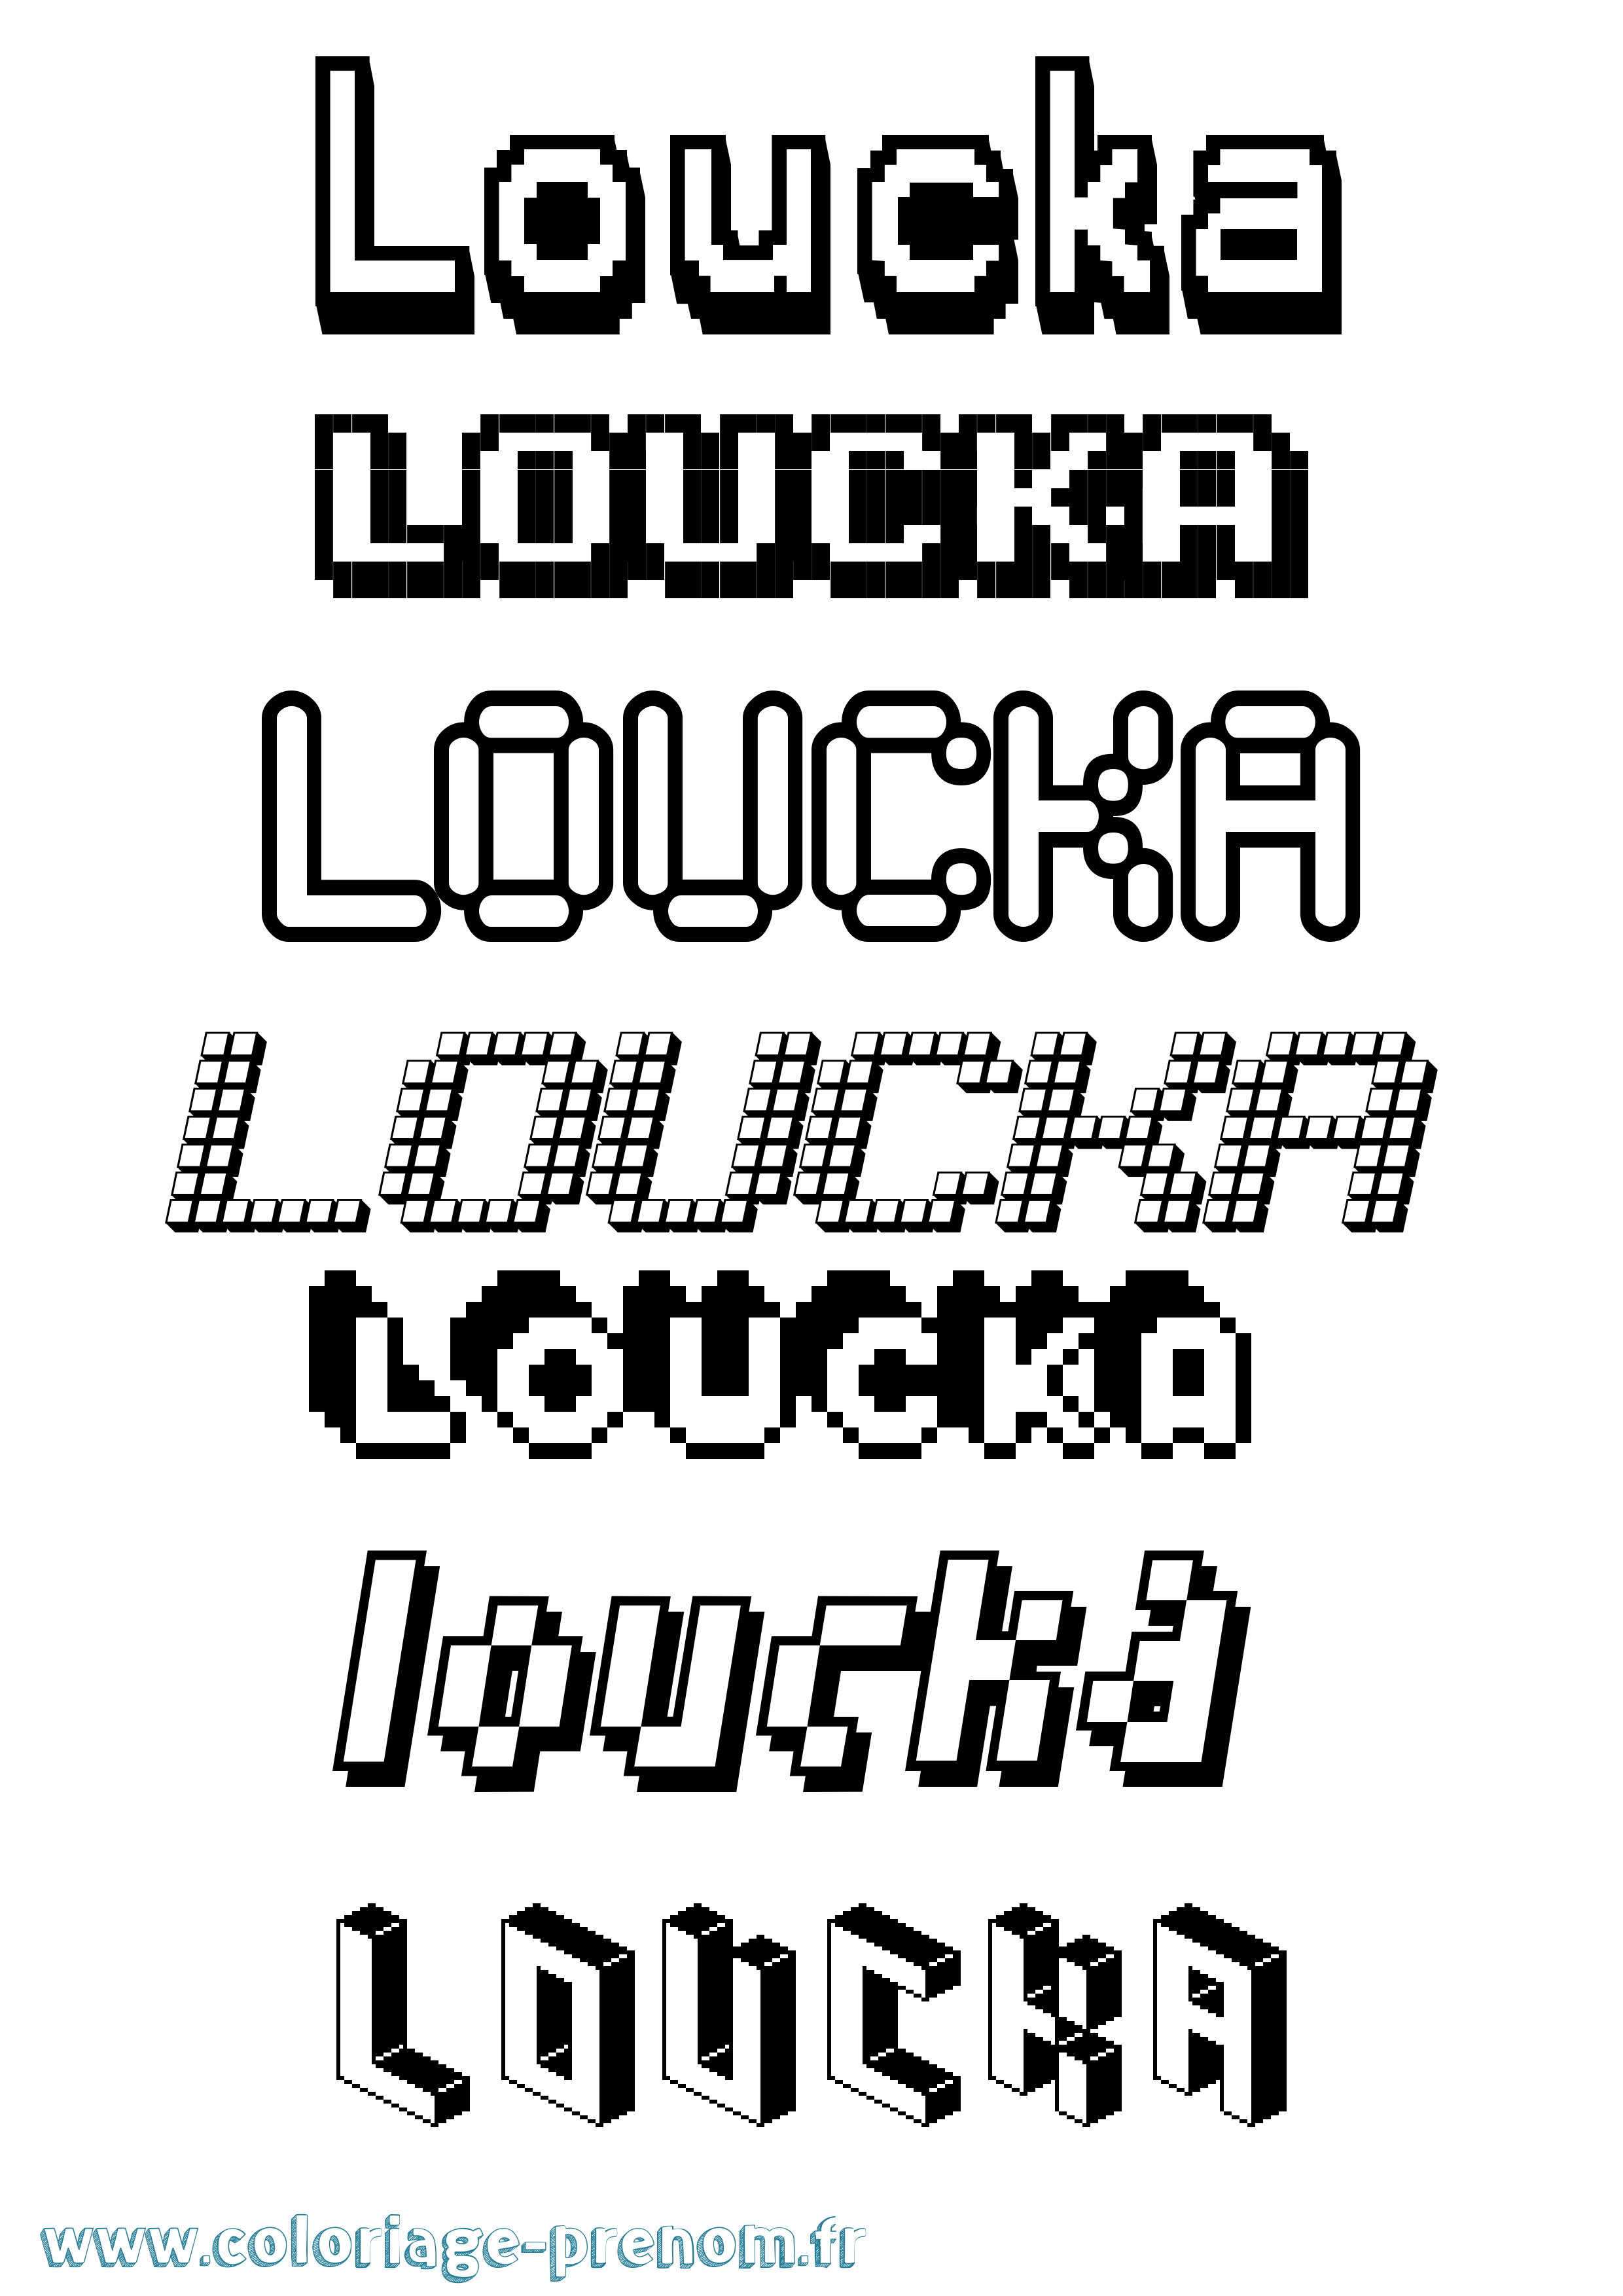 Coloriage prénom Loucka Pixel